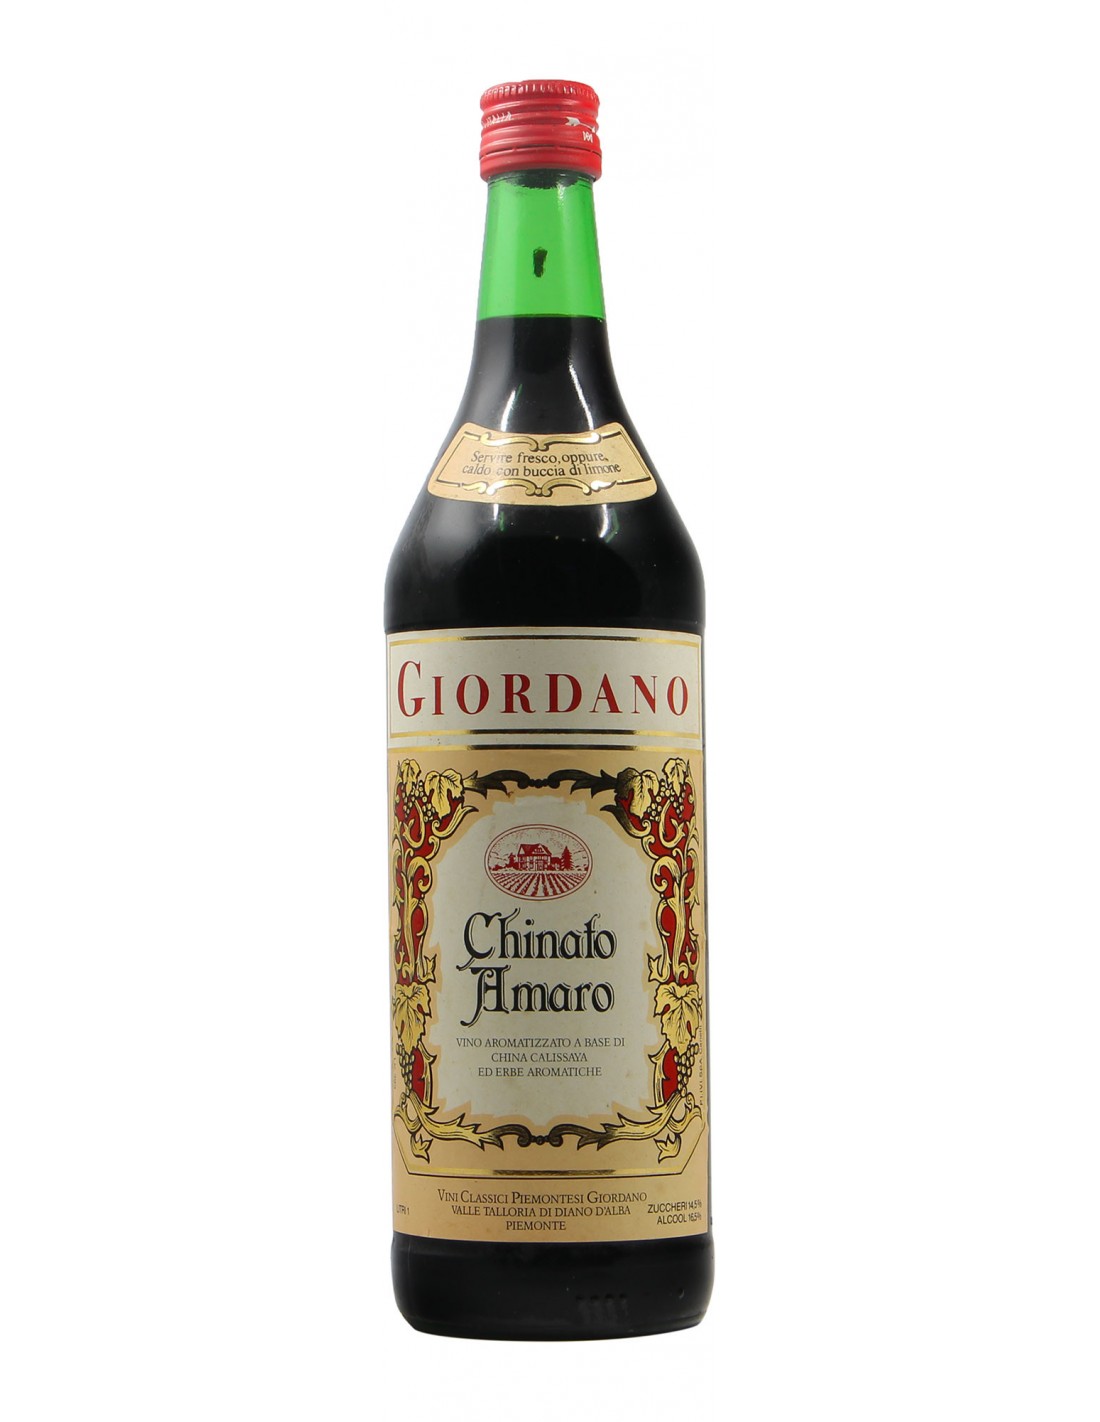 OLD CHINATO AMARO 1L NV GIORDANO Grandi Bottiglie